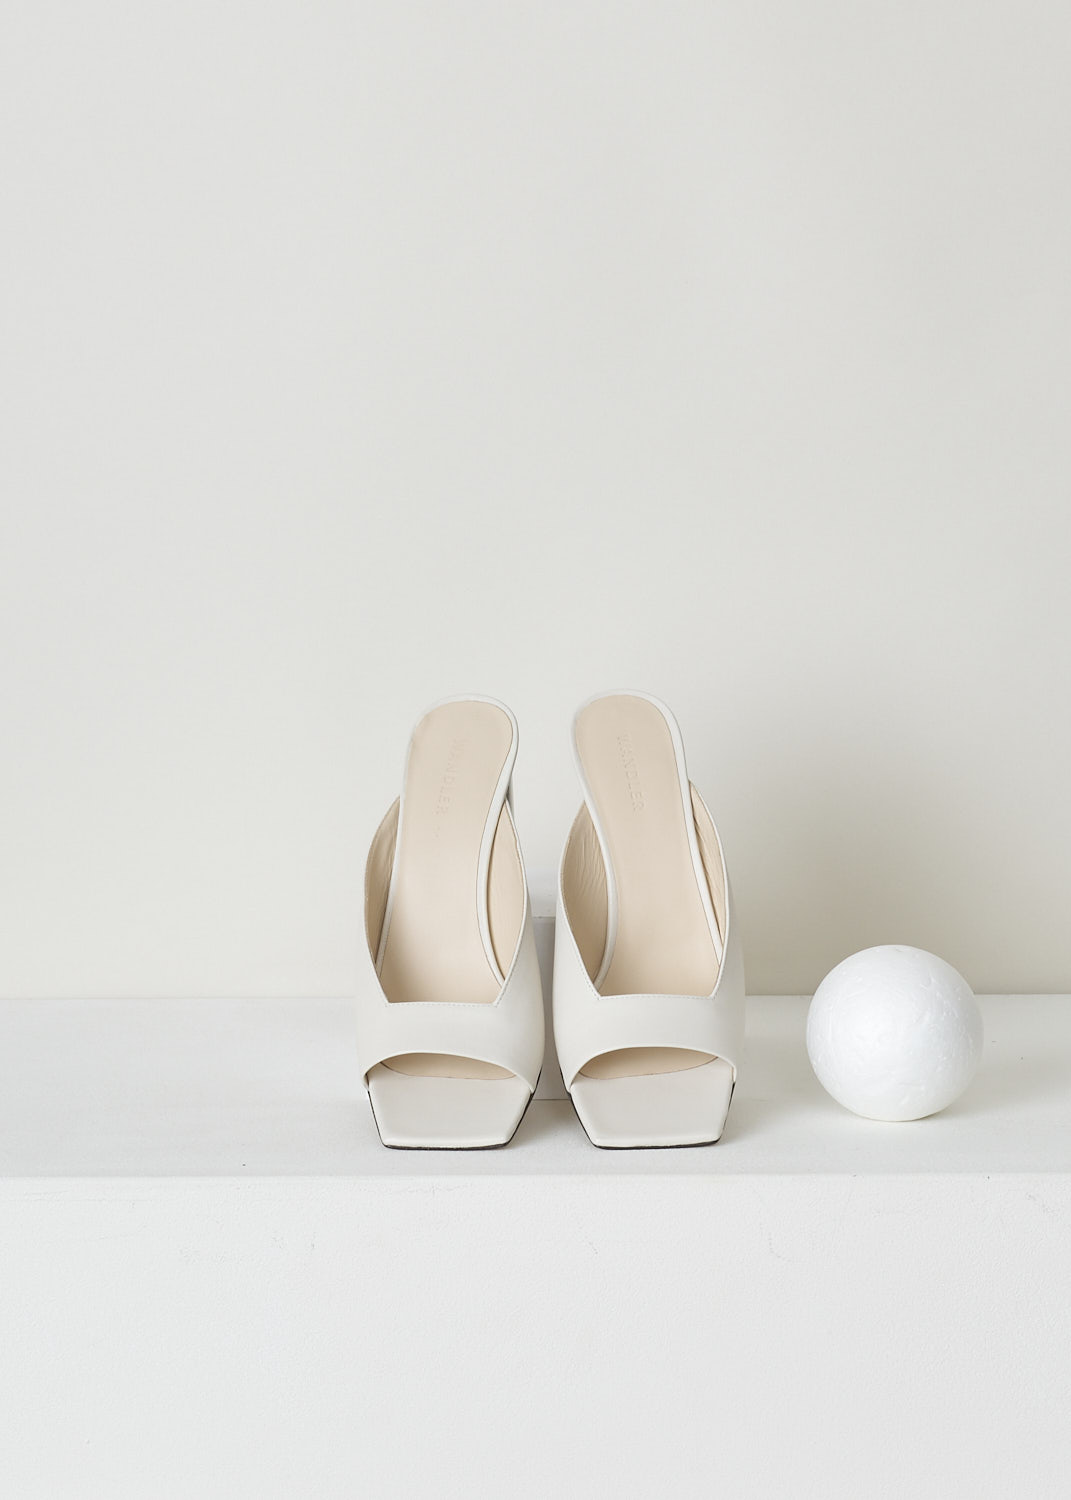 Off White Sandals Heels - Buy Off White Sandals Heels online in India